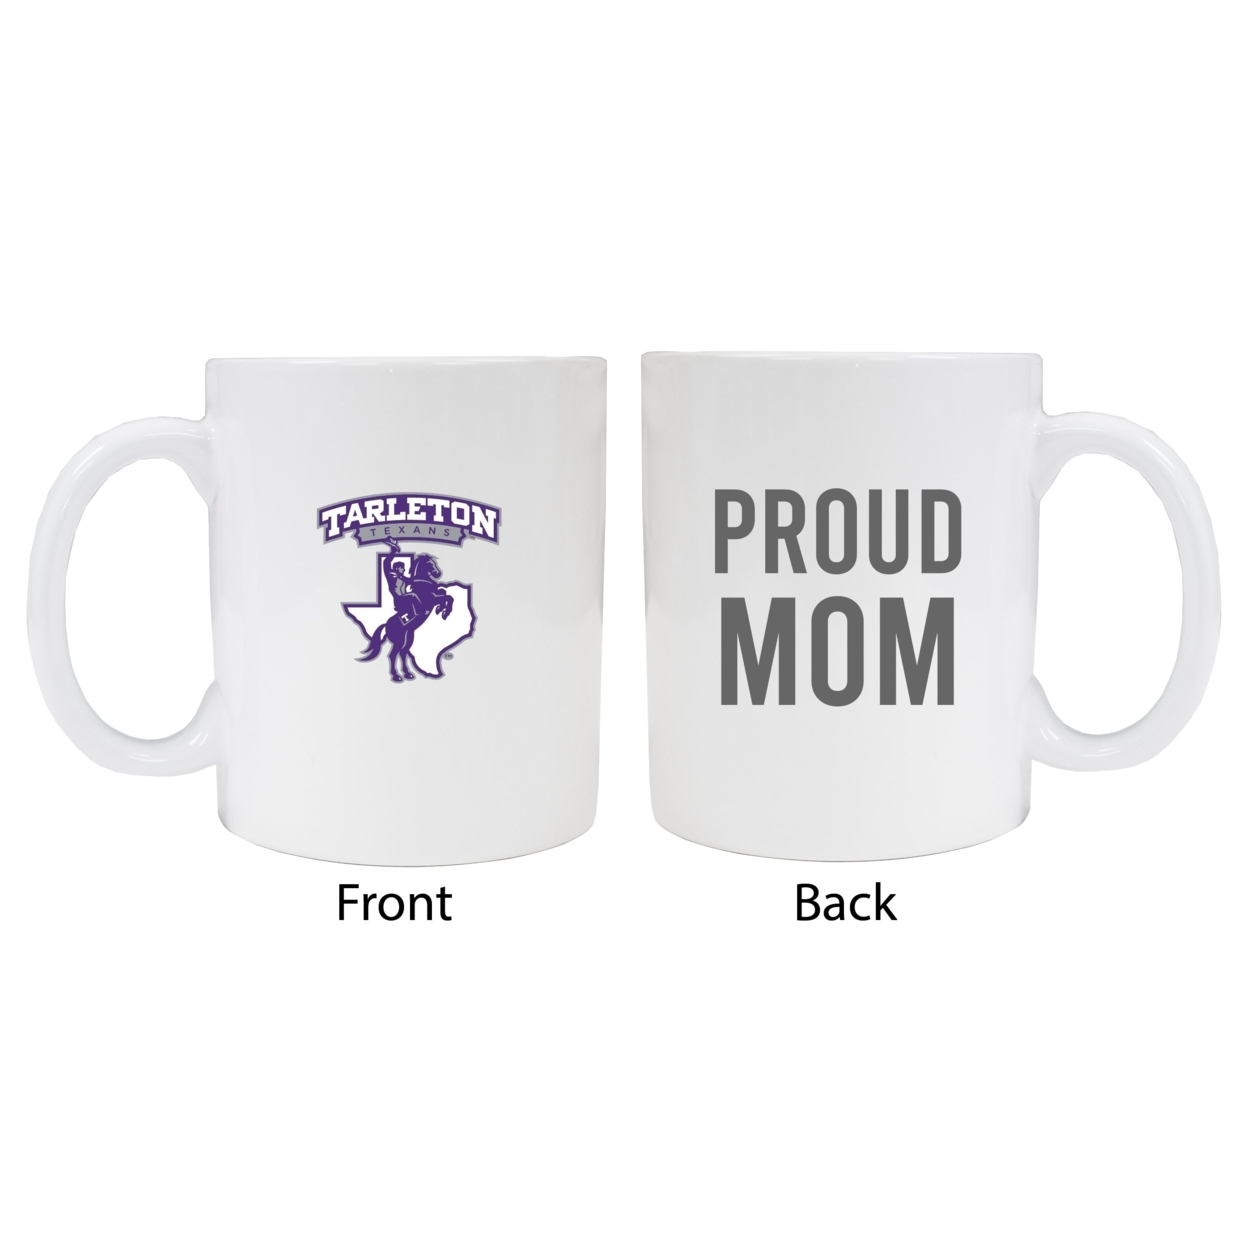 Tarleton State University Proud Mom Ceramic Coffee Mug - White (2 Pack)